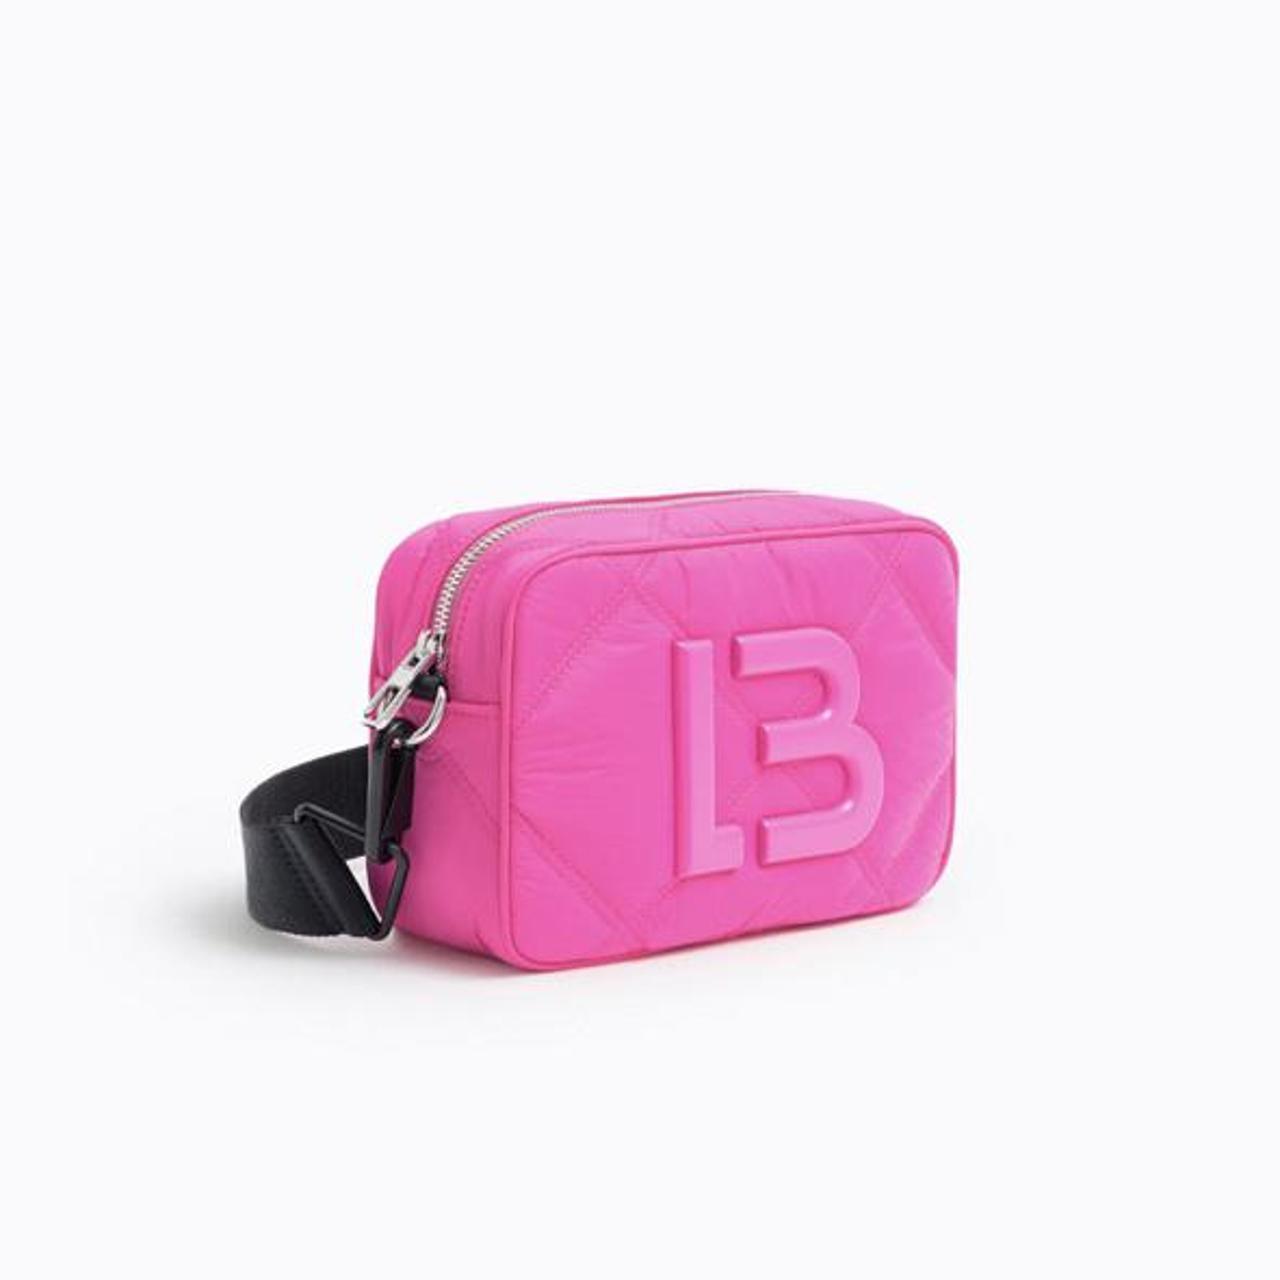 Crossbody bag Bimba y Lola Pink in Polyester - 30710829